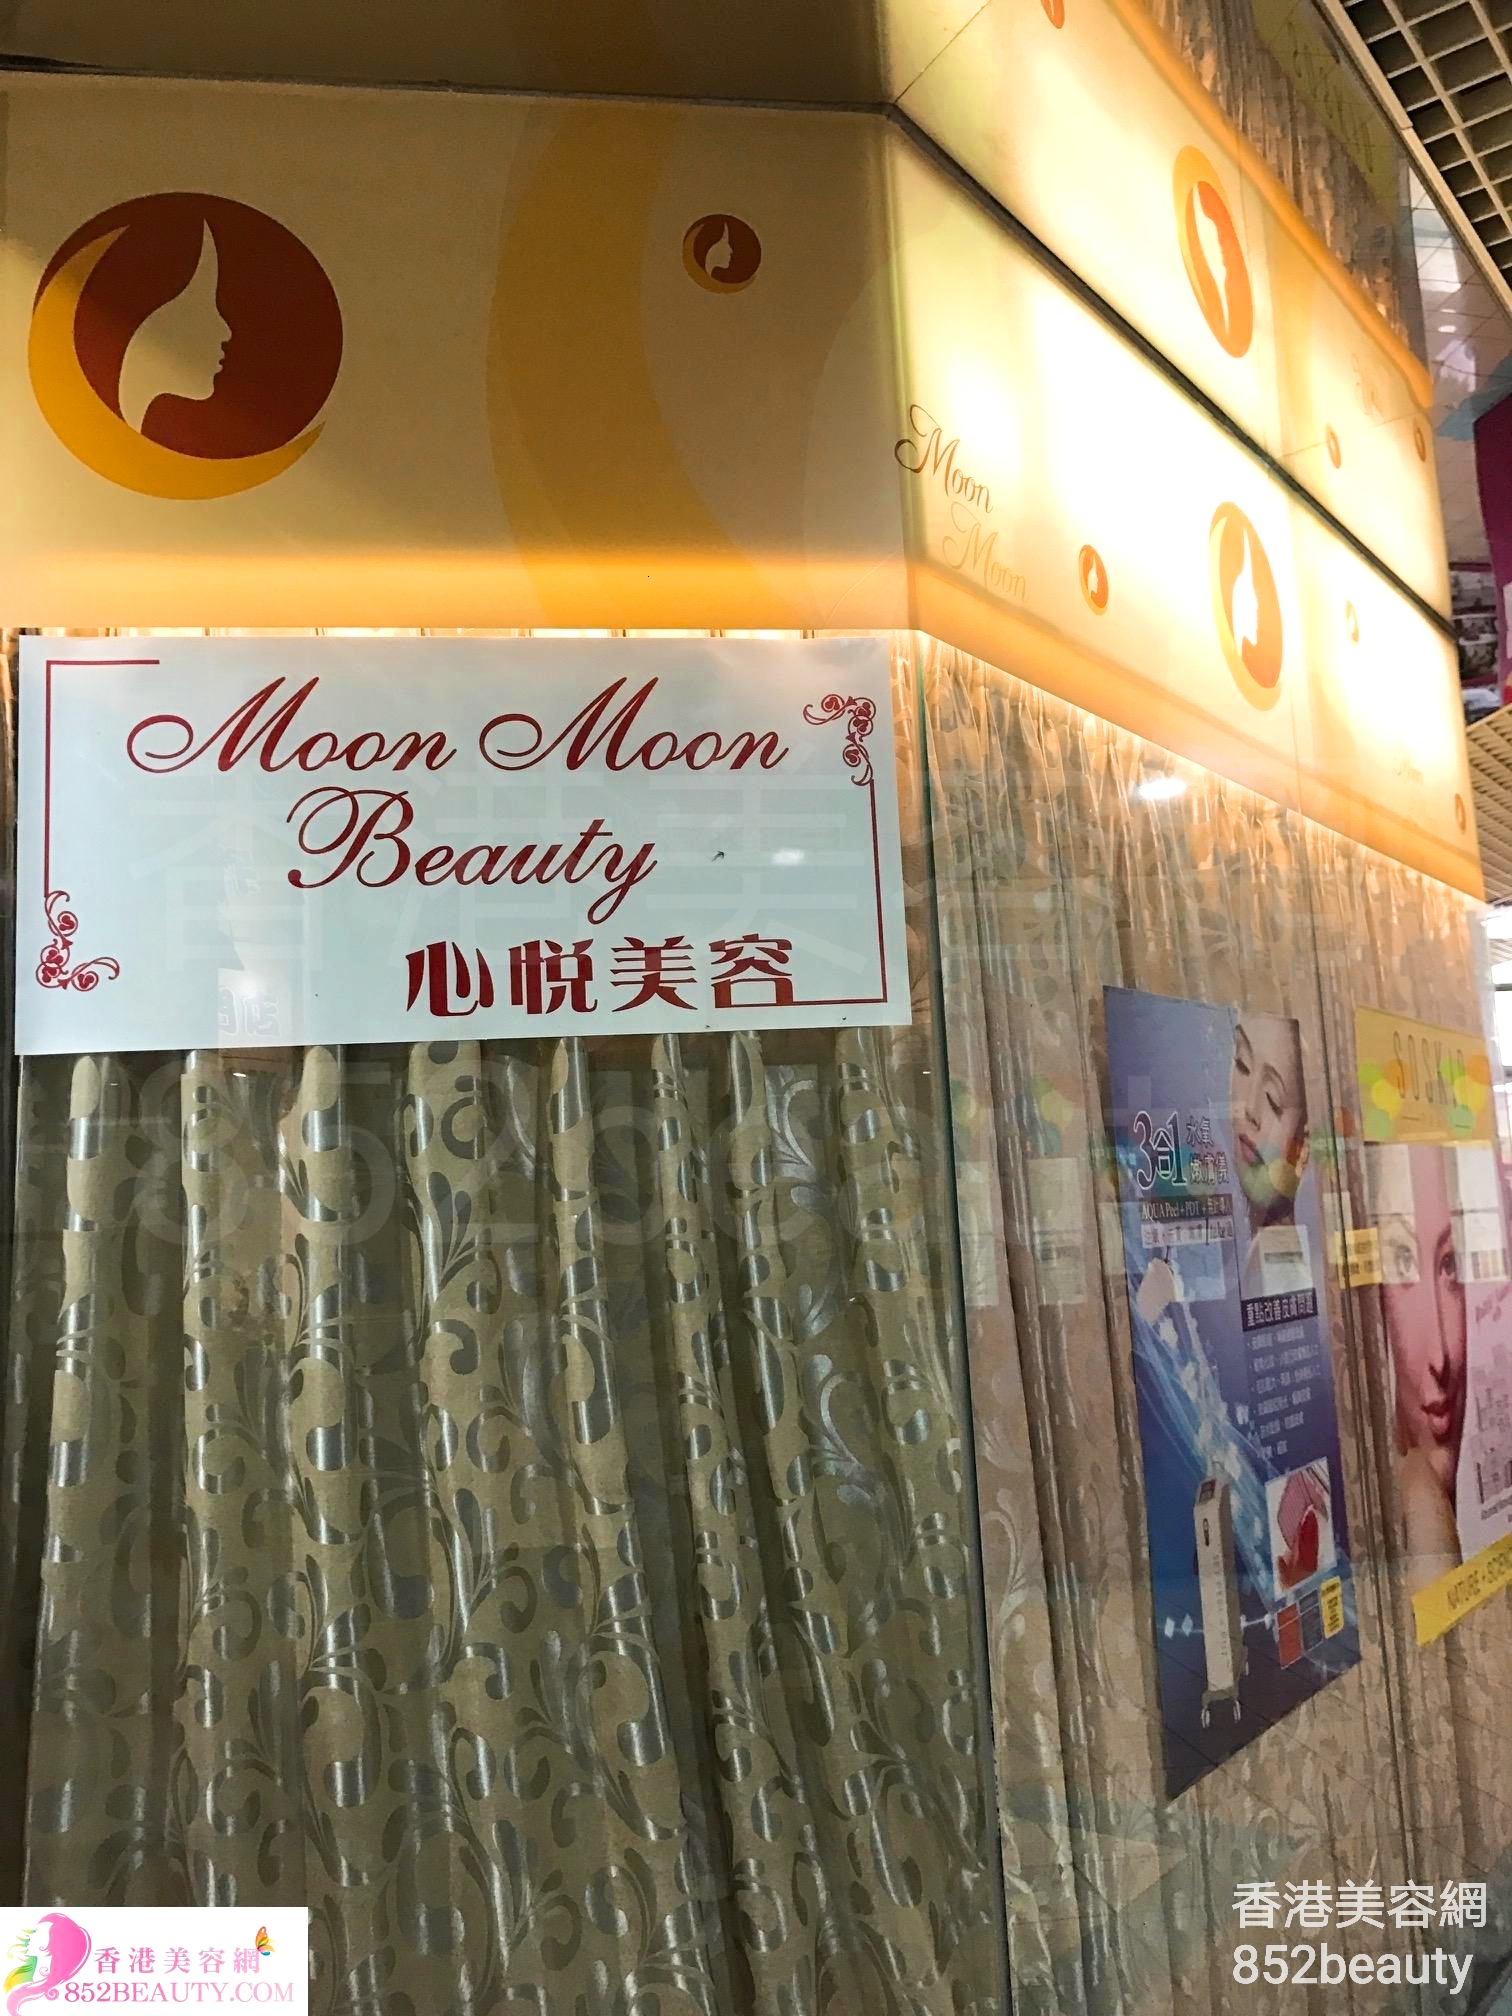 香港美容網 Hong Kong Beauty Salon 美容院 / 美容師: 心悅美容 Moon Moon Beauty